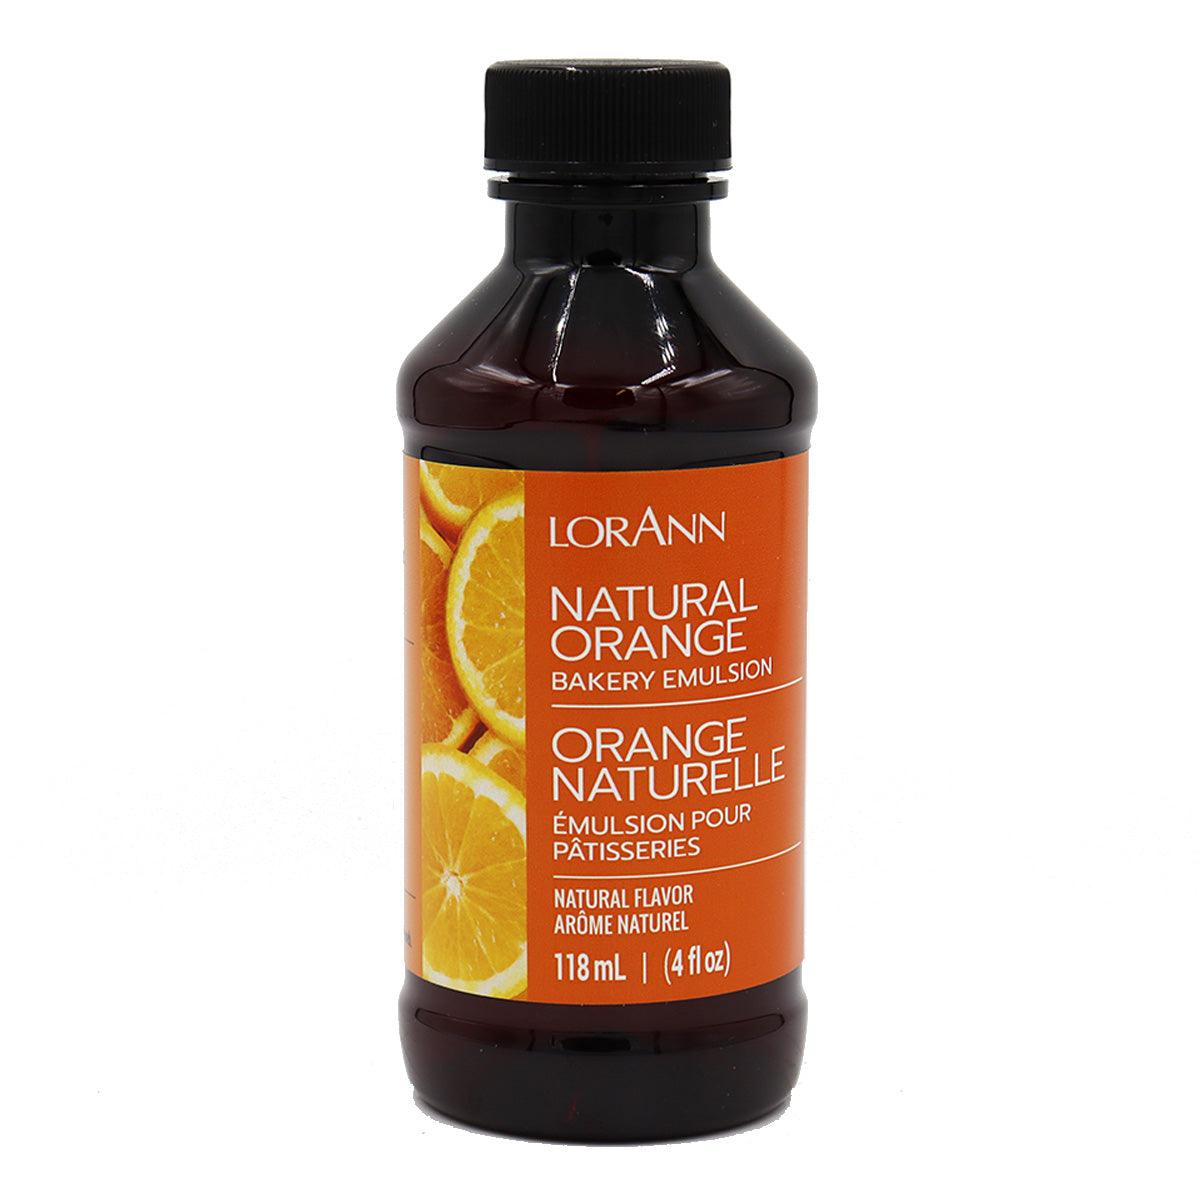 Natural Orange Bakery Emulsion 4 fl oz (118ml) - ViaCheff.com